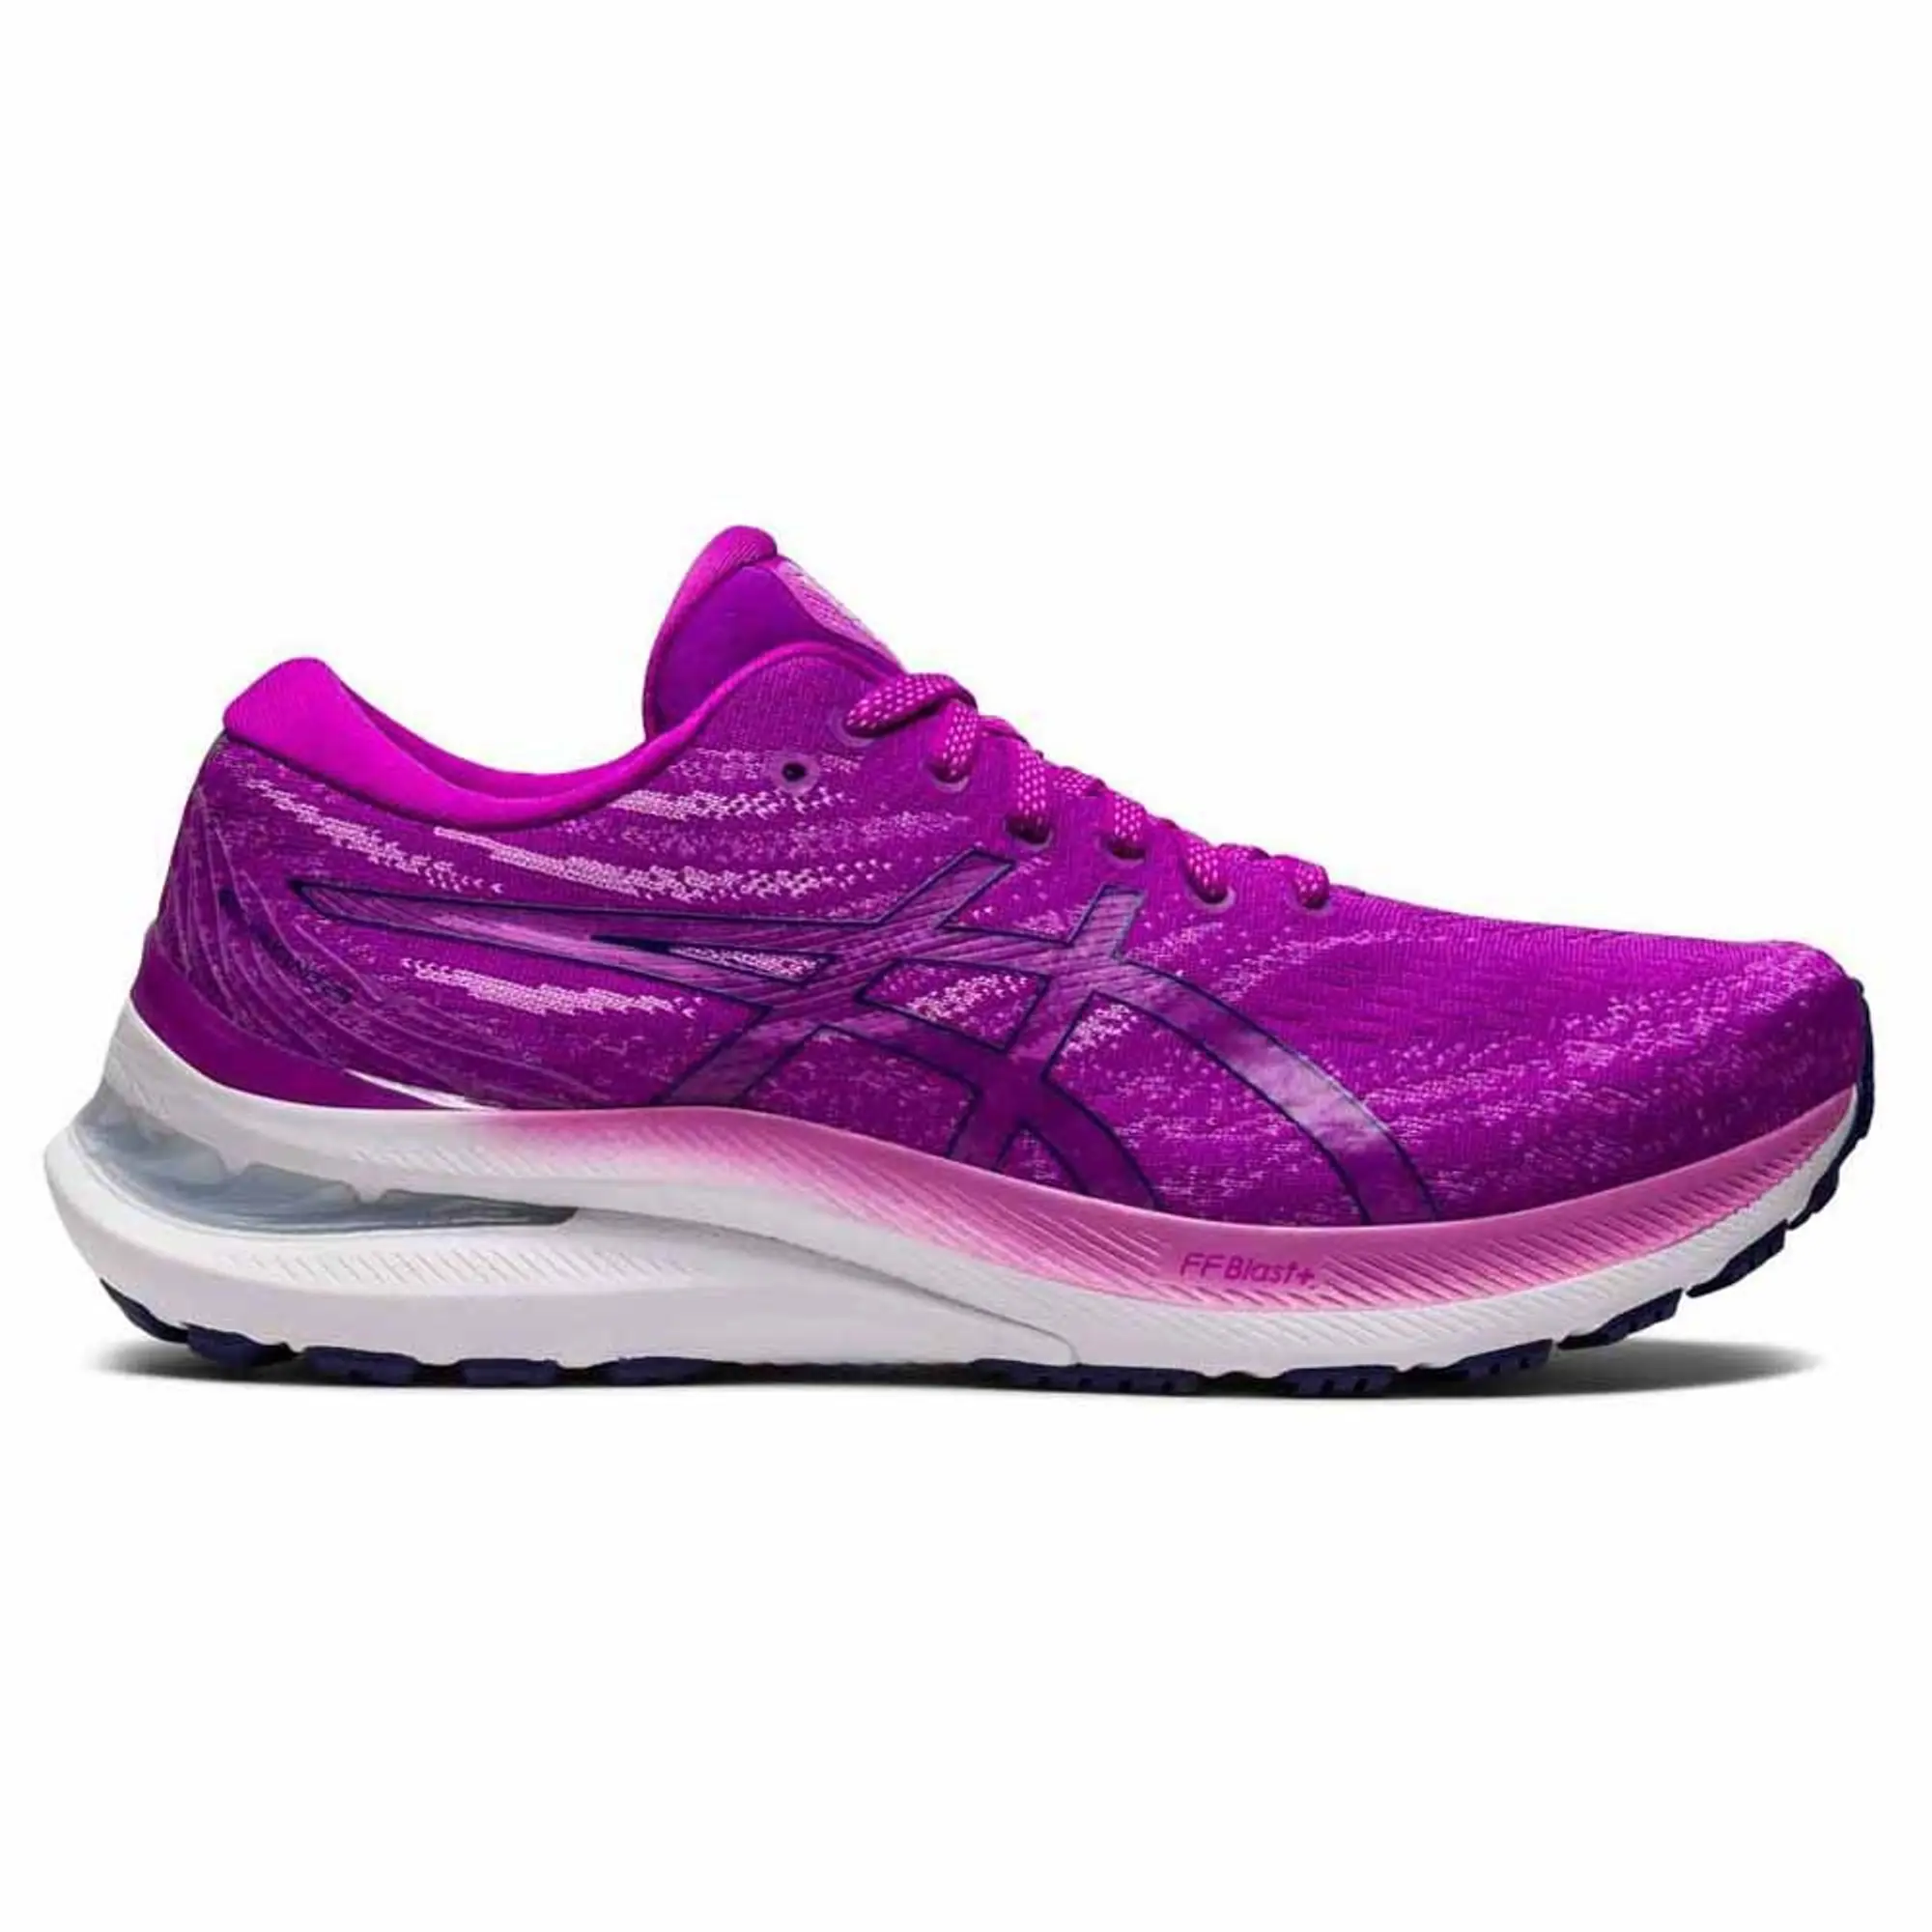 ASICS Gel-Kayano 29 Stability Running Shoe Women - Violet, White